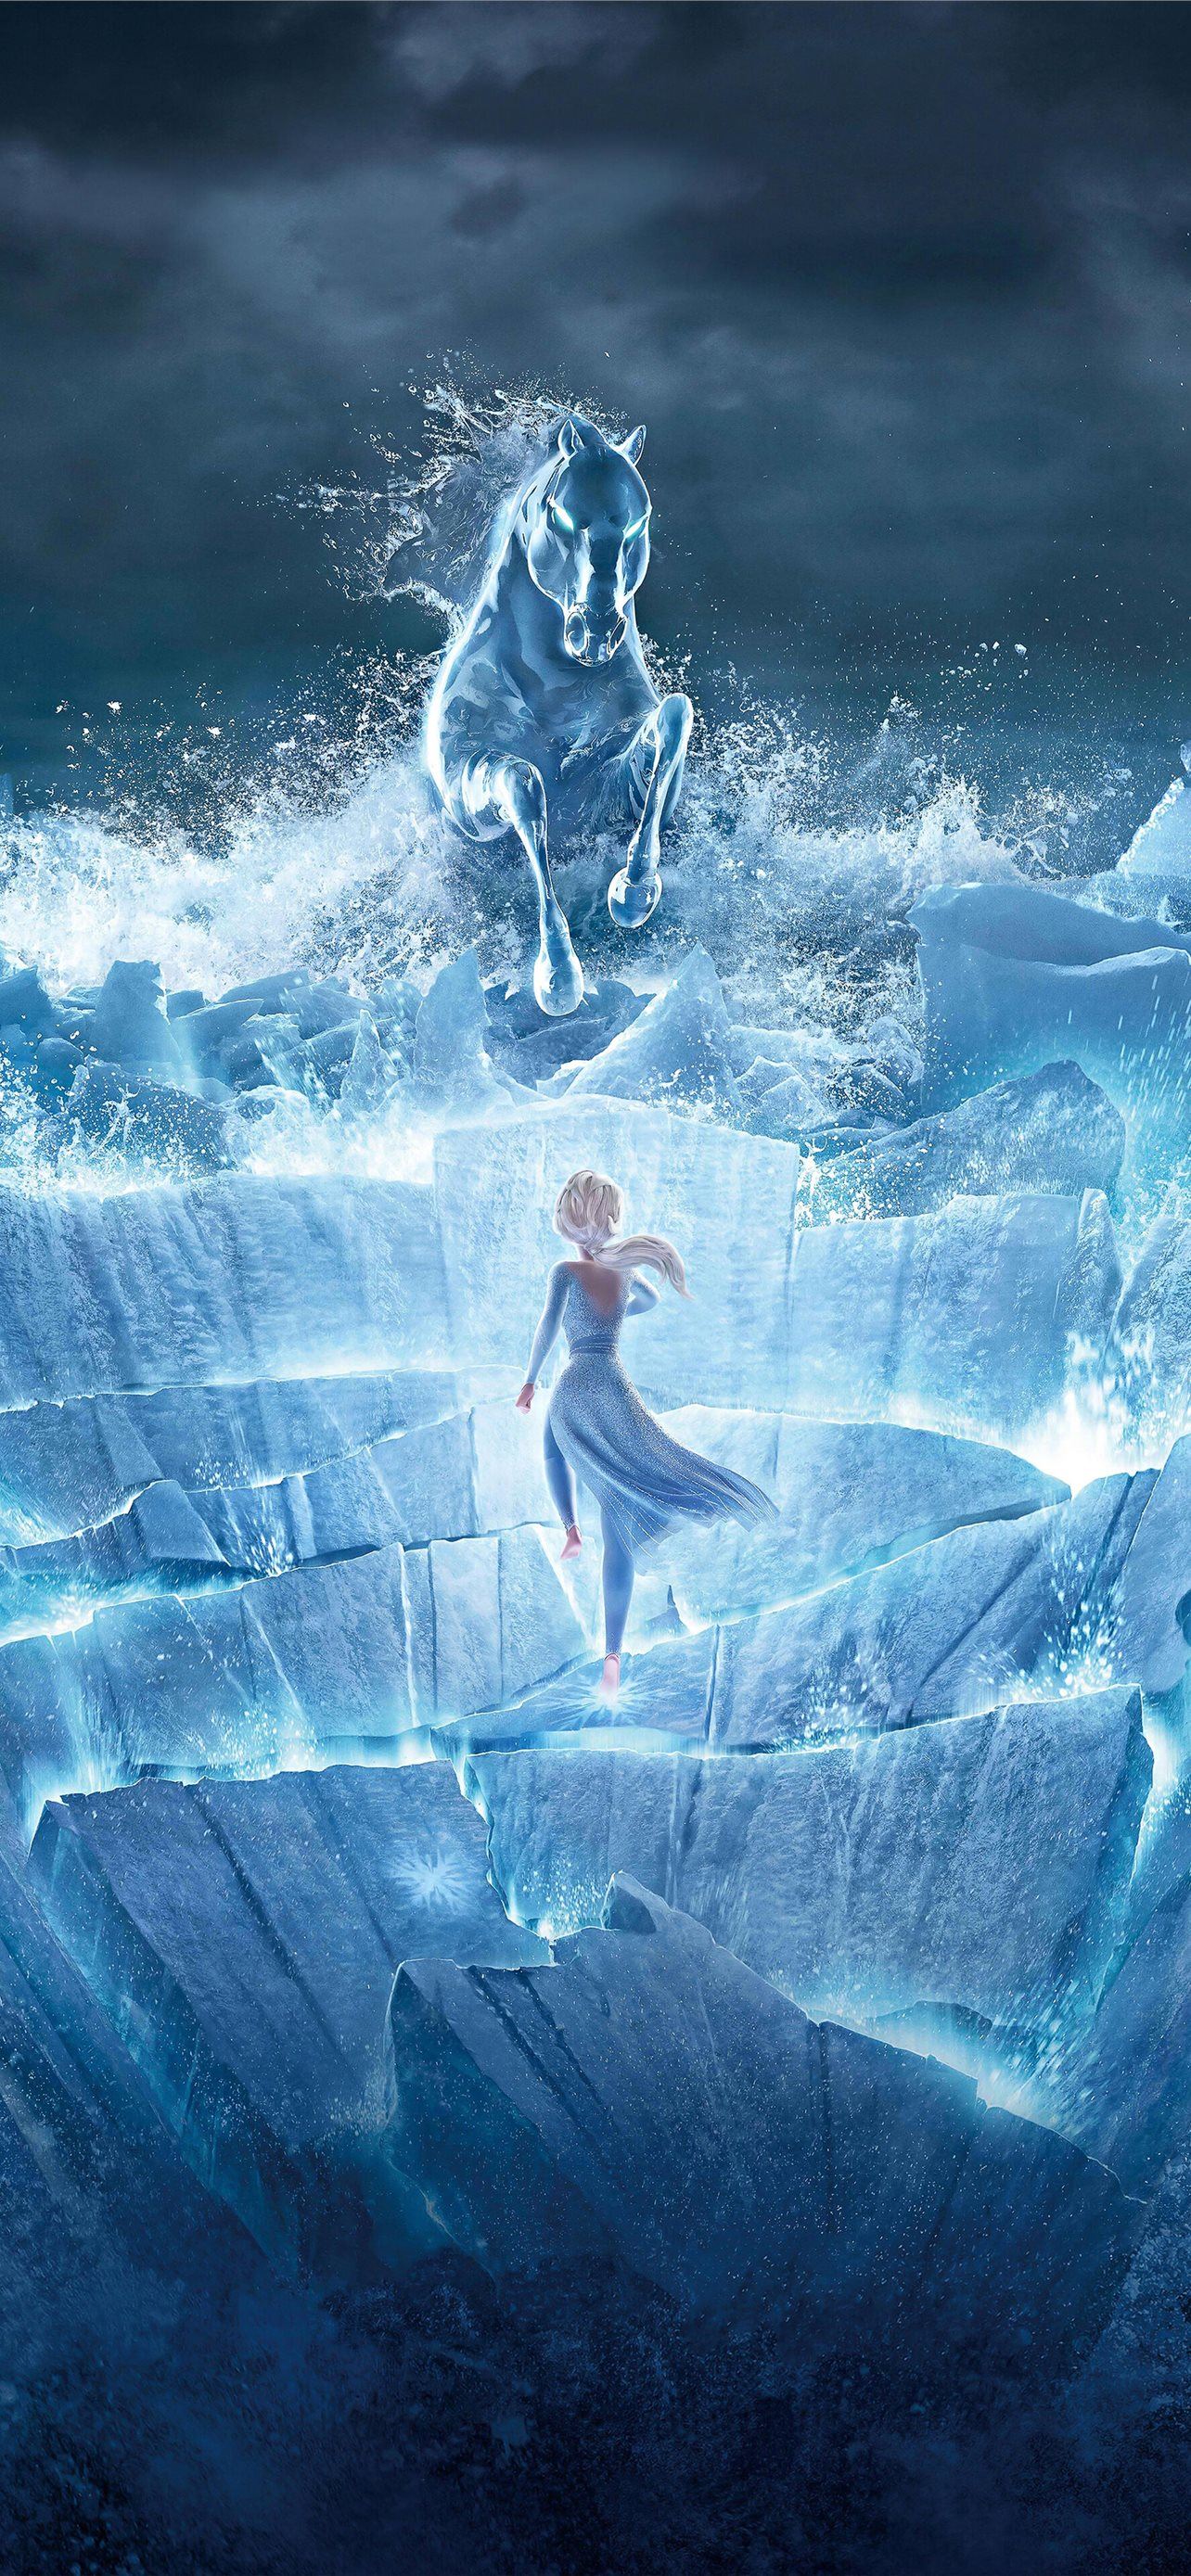 Elsa Frozen 2 Art phone HD Image Backgroun. iPhone Wallpaper Free Download